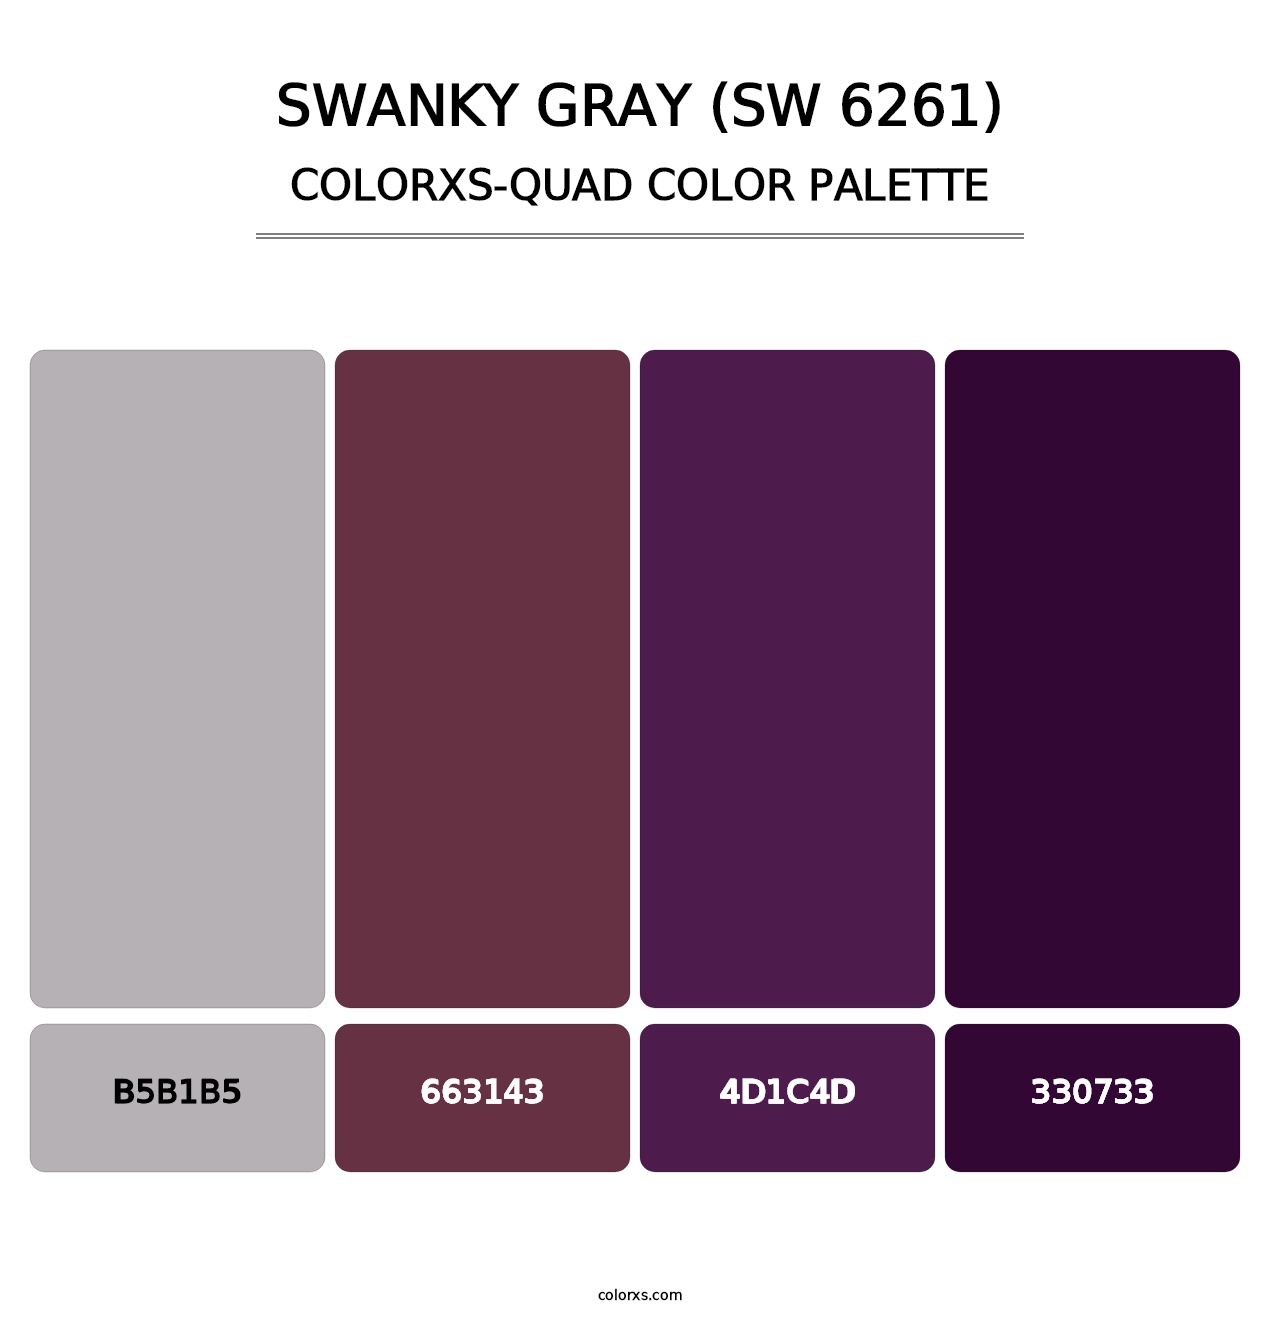 Swanky Gray (SW 6261) - Colorxs Quad Palette